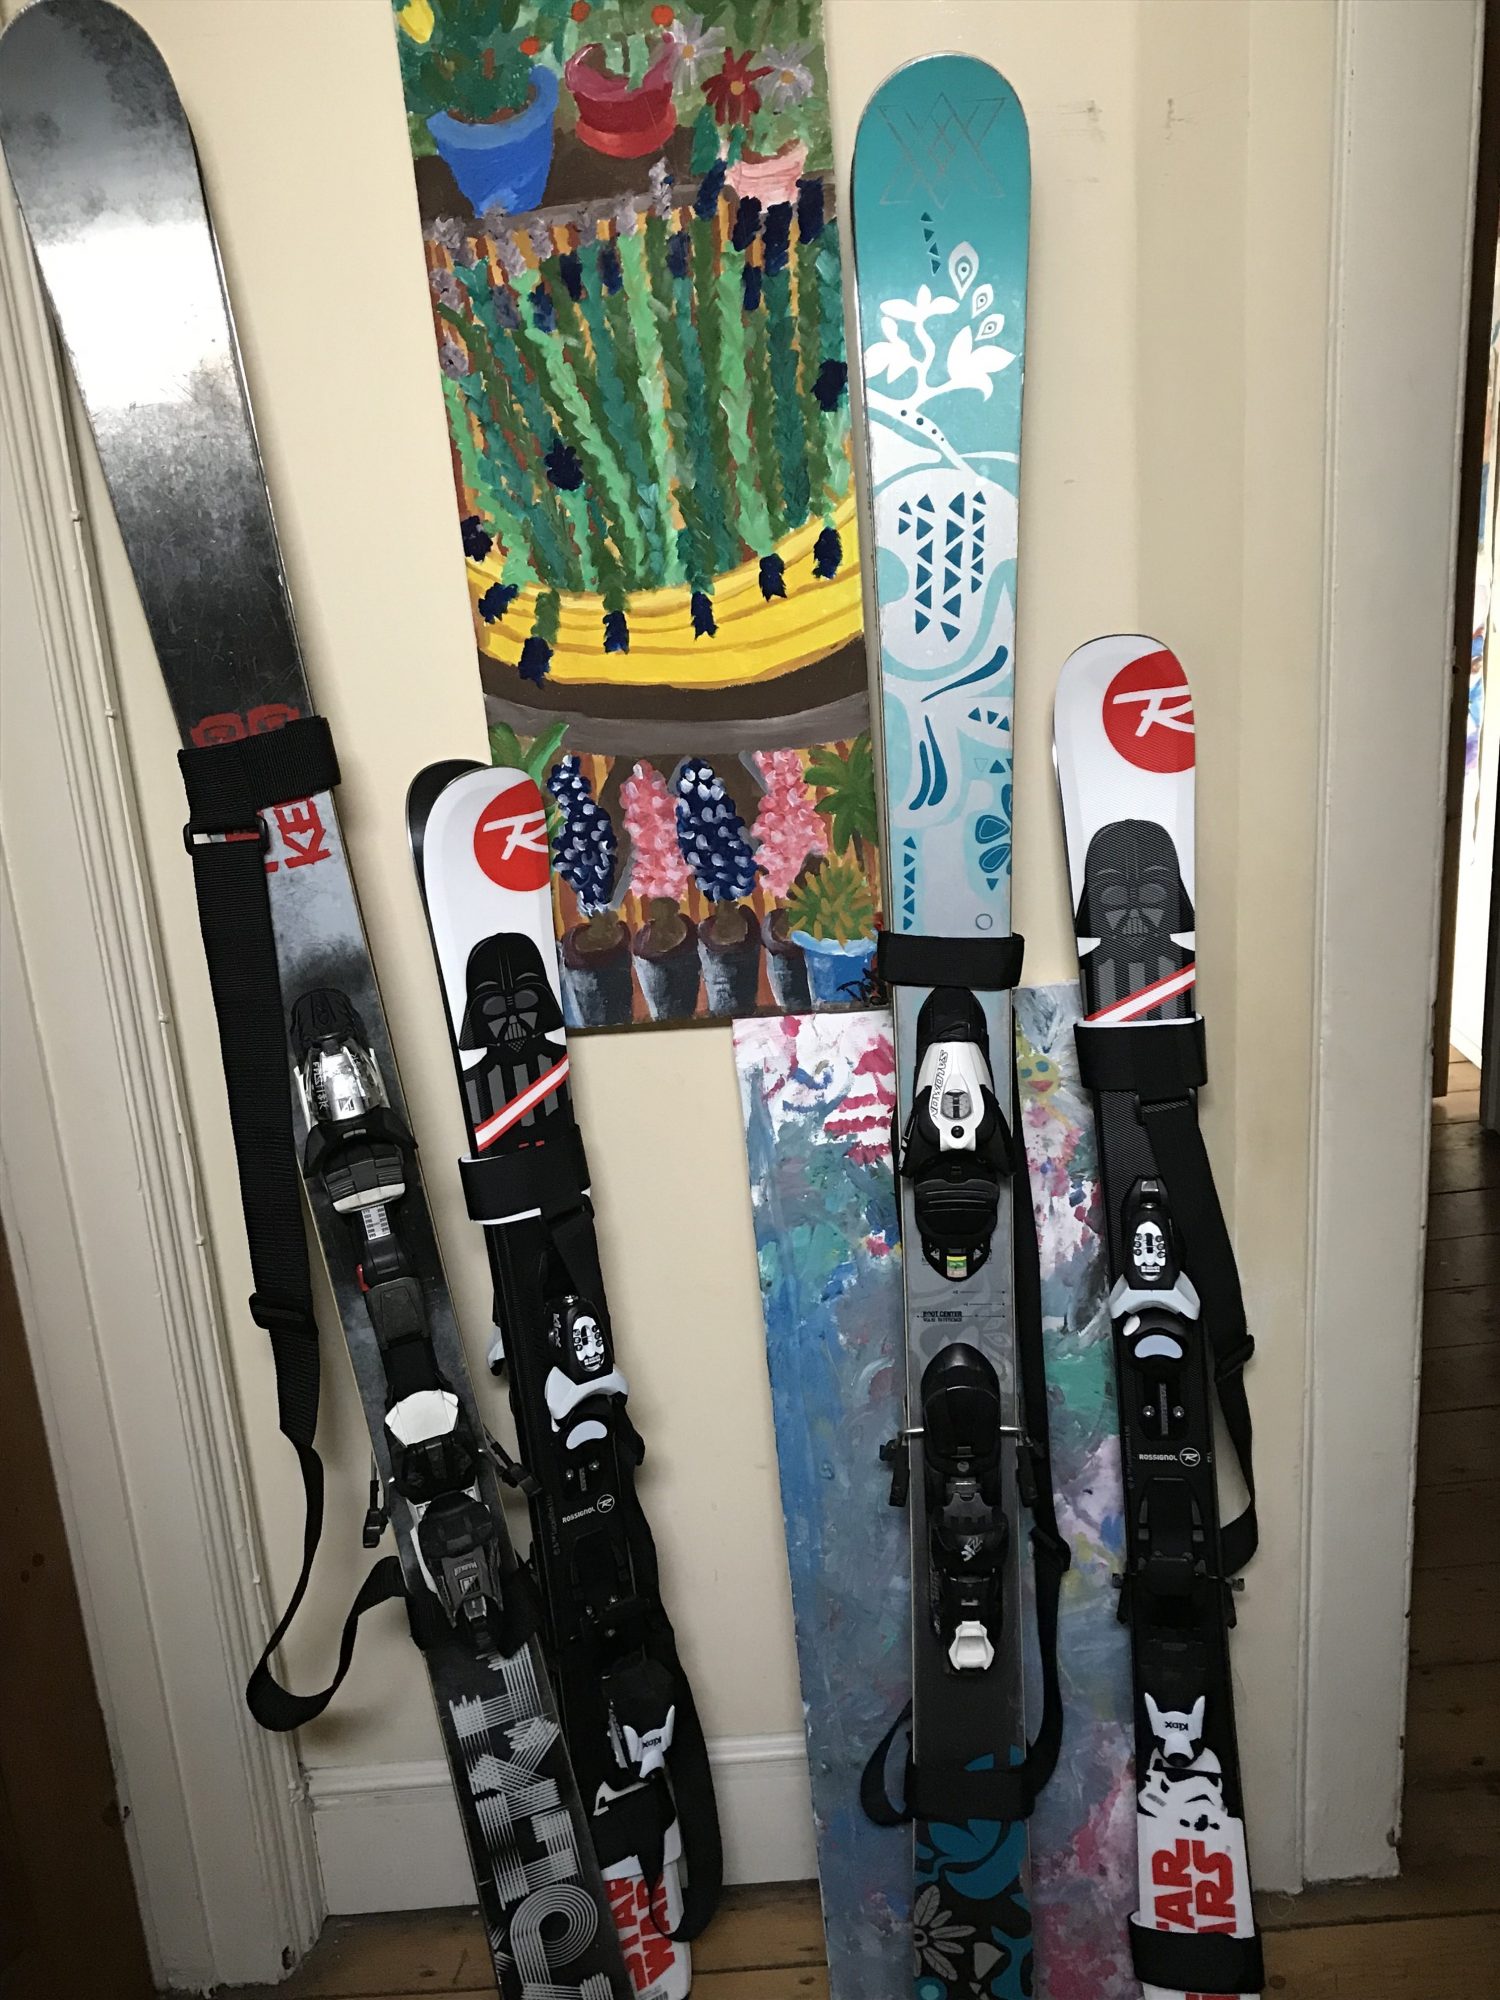 The skis are ready to go on the ski rack. Photo by The-Ski-Guru.